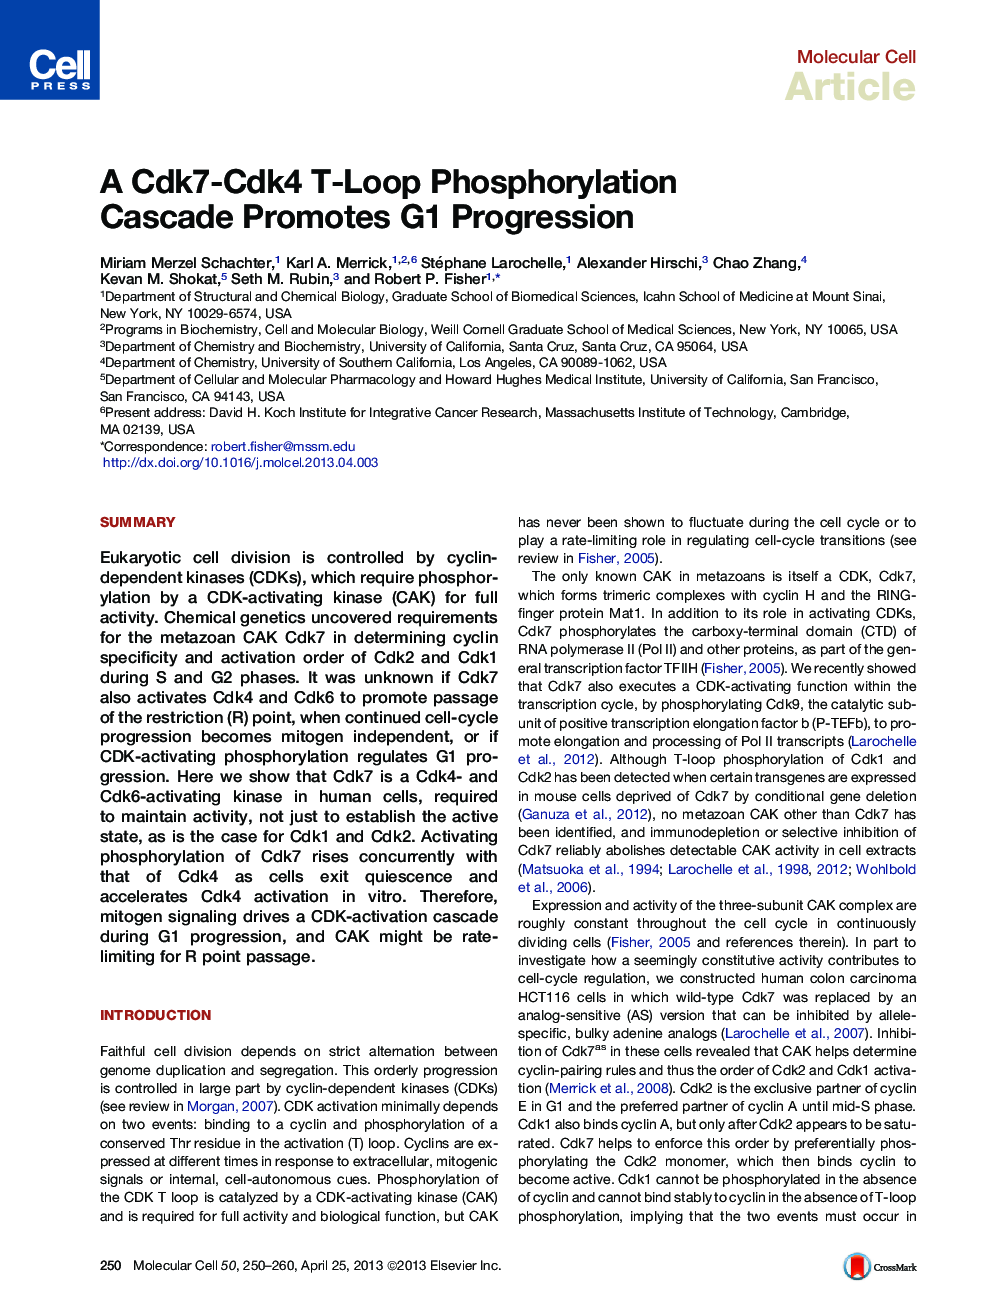 A Cdk7-Cdk4 T-Loop Phosphorylation Cascade Promotes G1 Progression